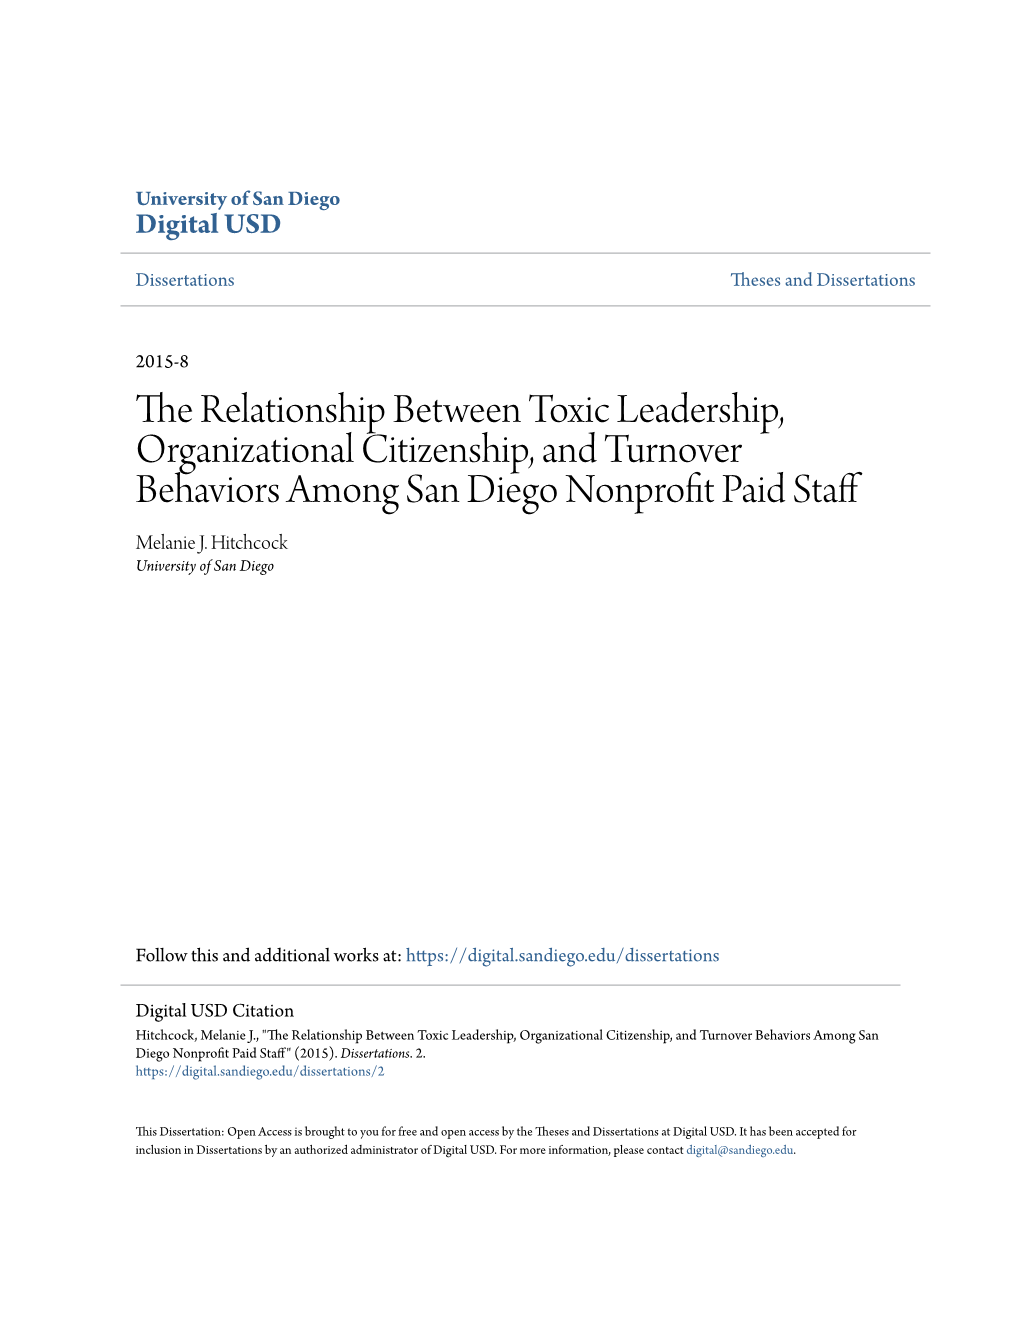 The Relationship Between Toxic Leadership, Organizational Citizenship, and Turnover Behaviors Among San Diego Nonprofit Aidp Staff Melanie J